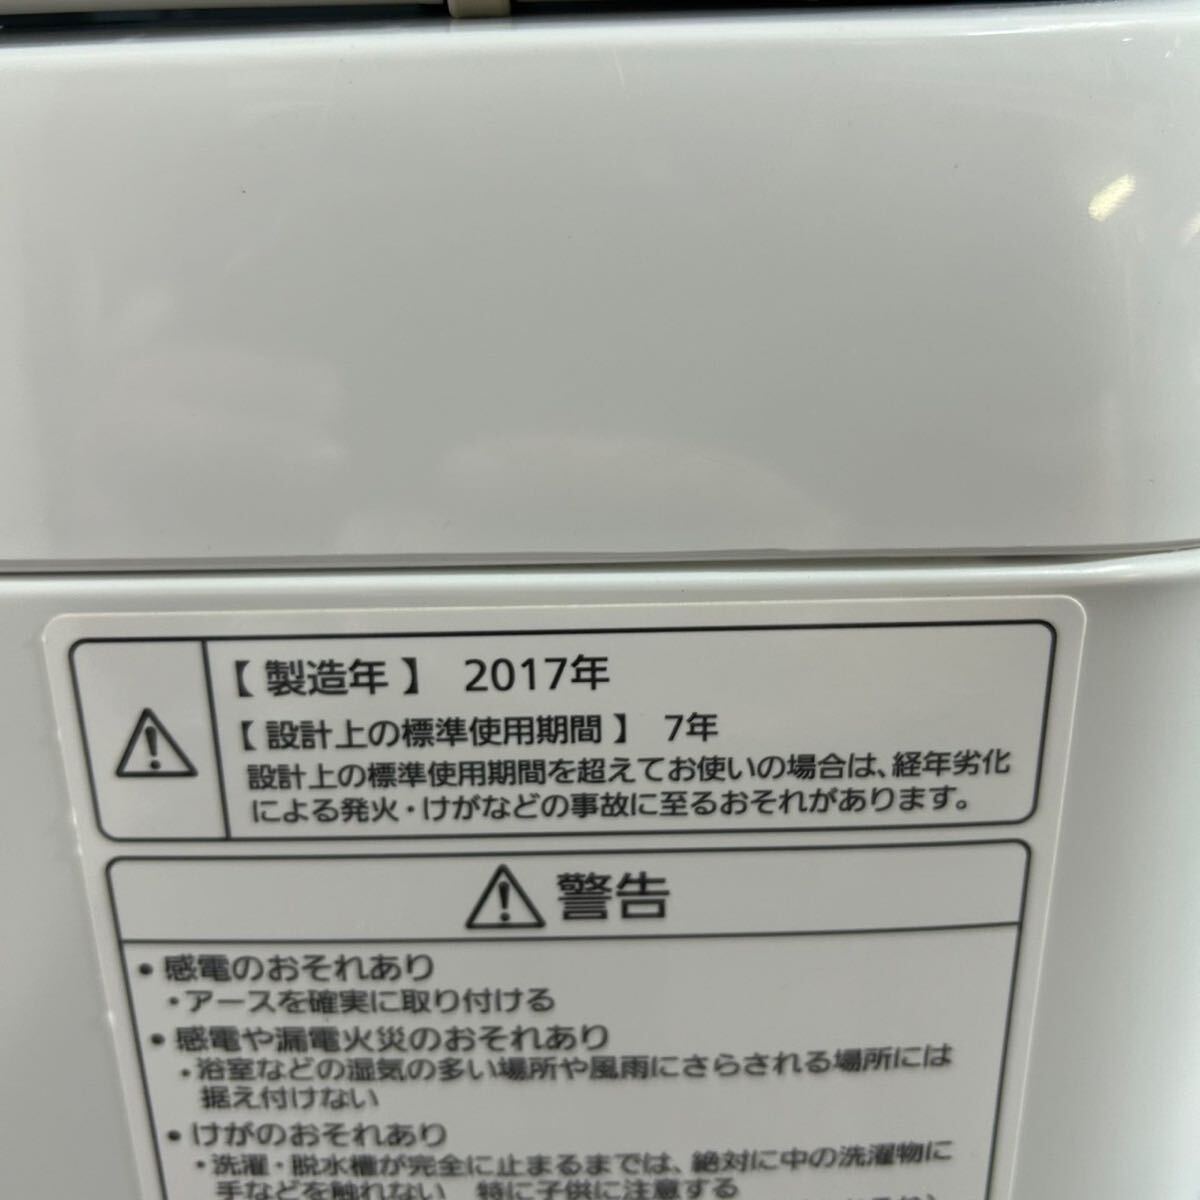 Panasonic パナソニック 洗濯機 9.0kg NA-F9AE5-S 大きめ d2149 全自動洗濯機 NA-F9AE5 2017年製 格安_画像10